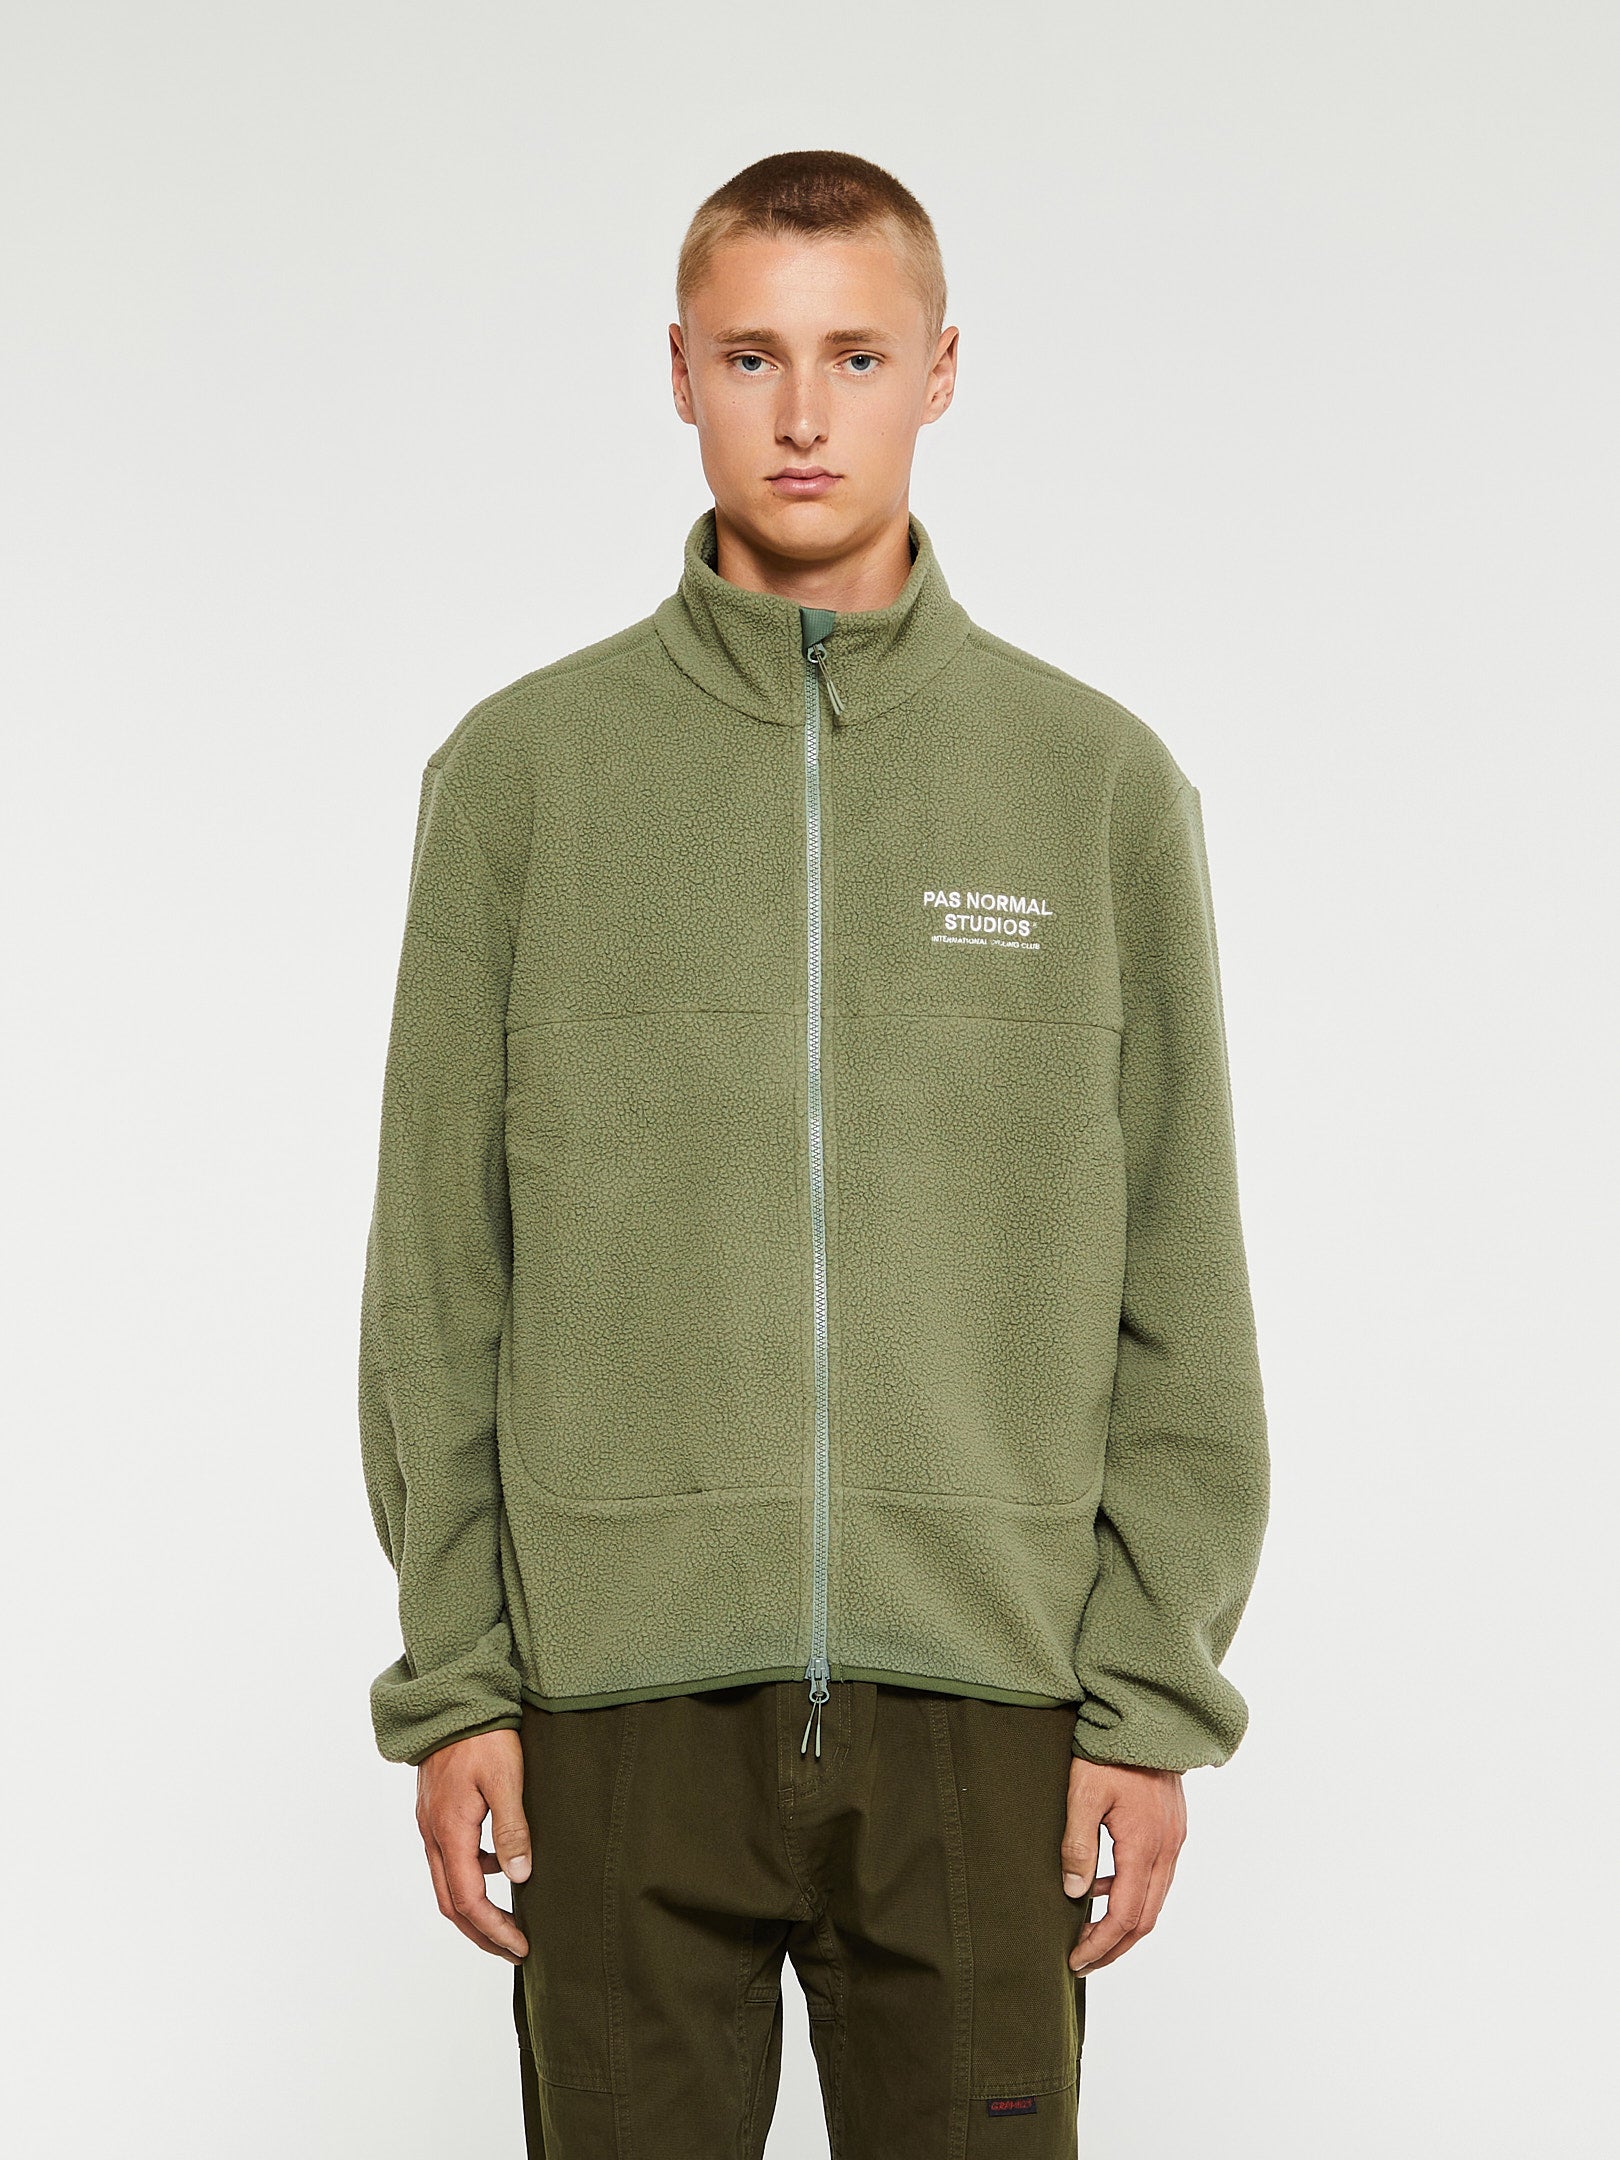 Pas Normal Studios - Off-Race Fleece Jacket in Army Green